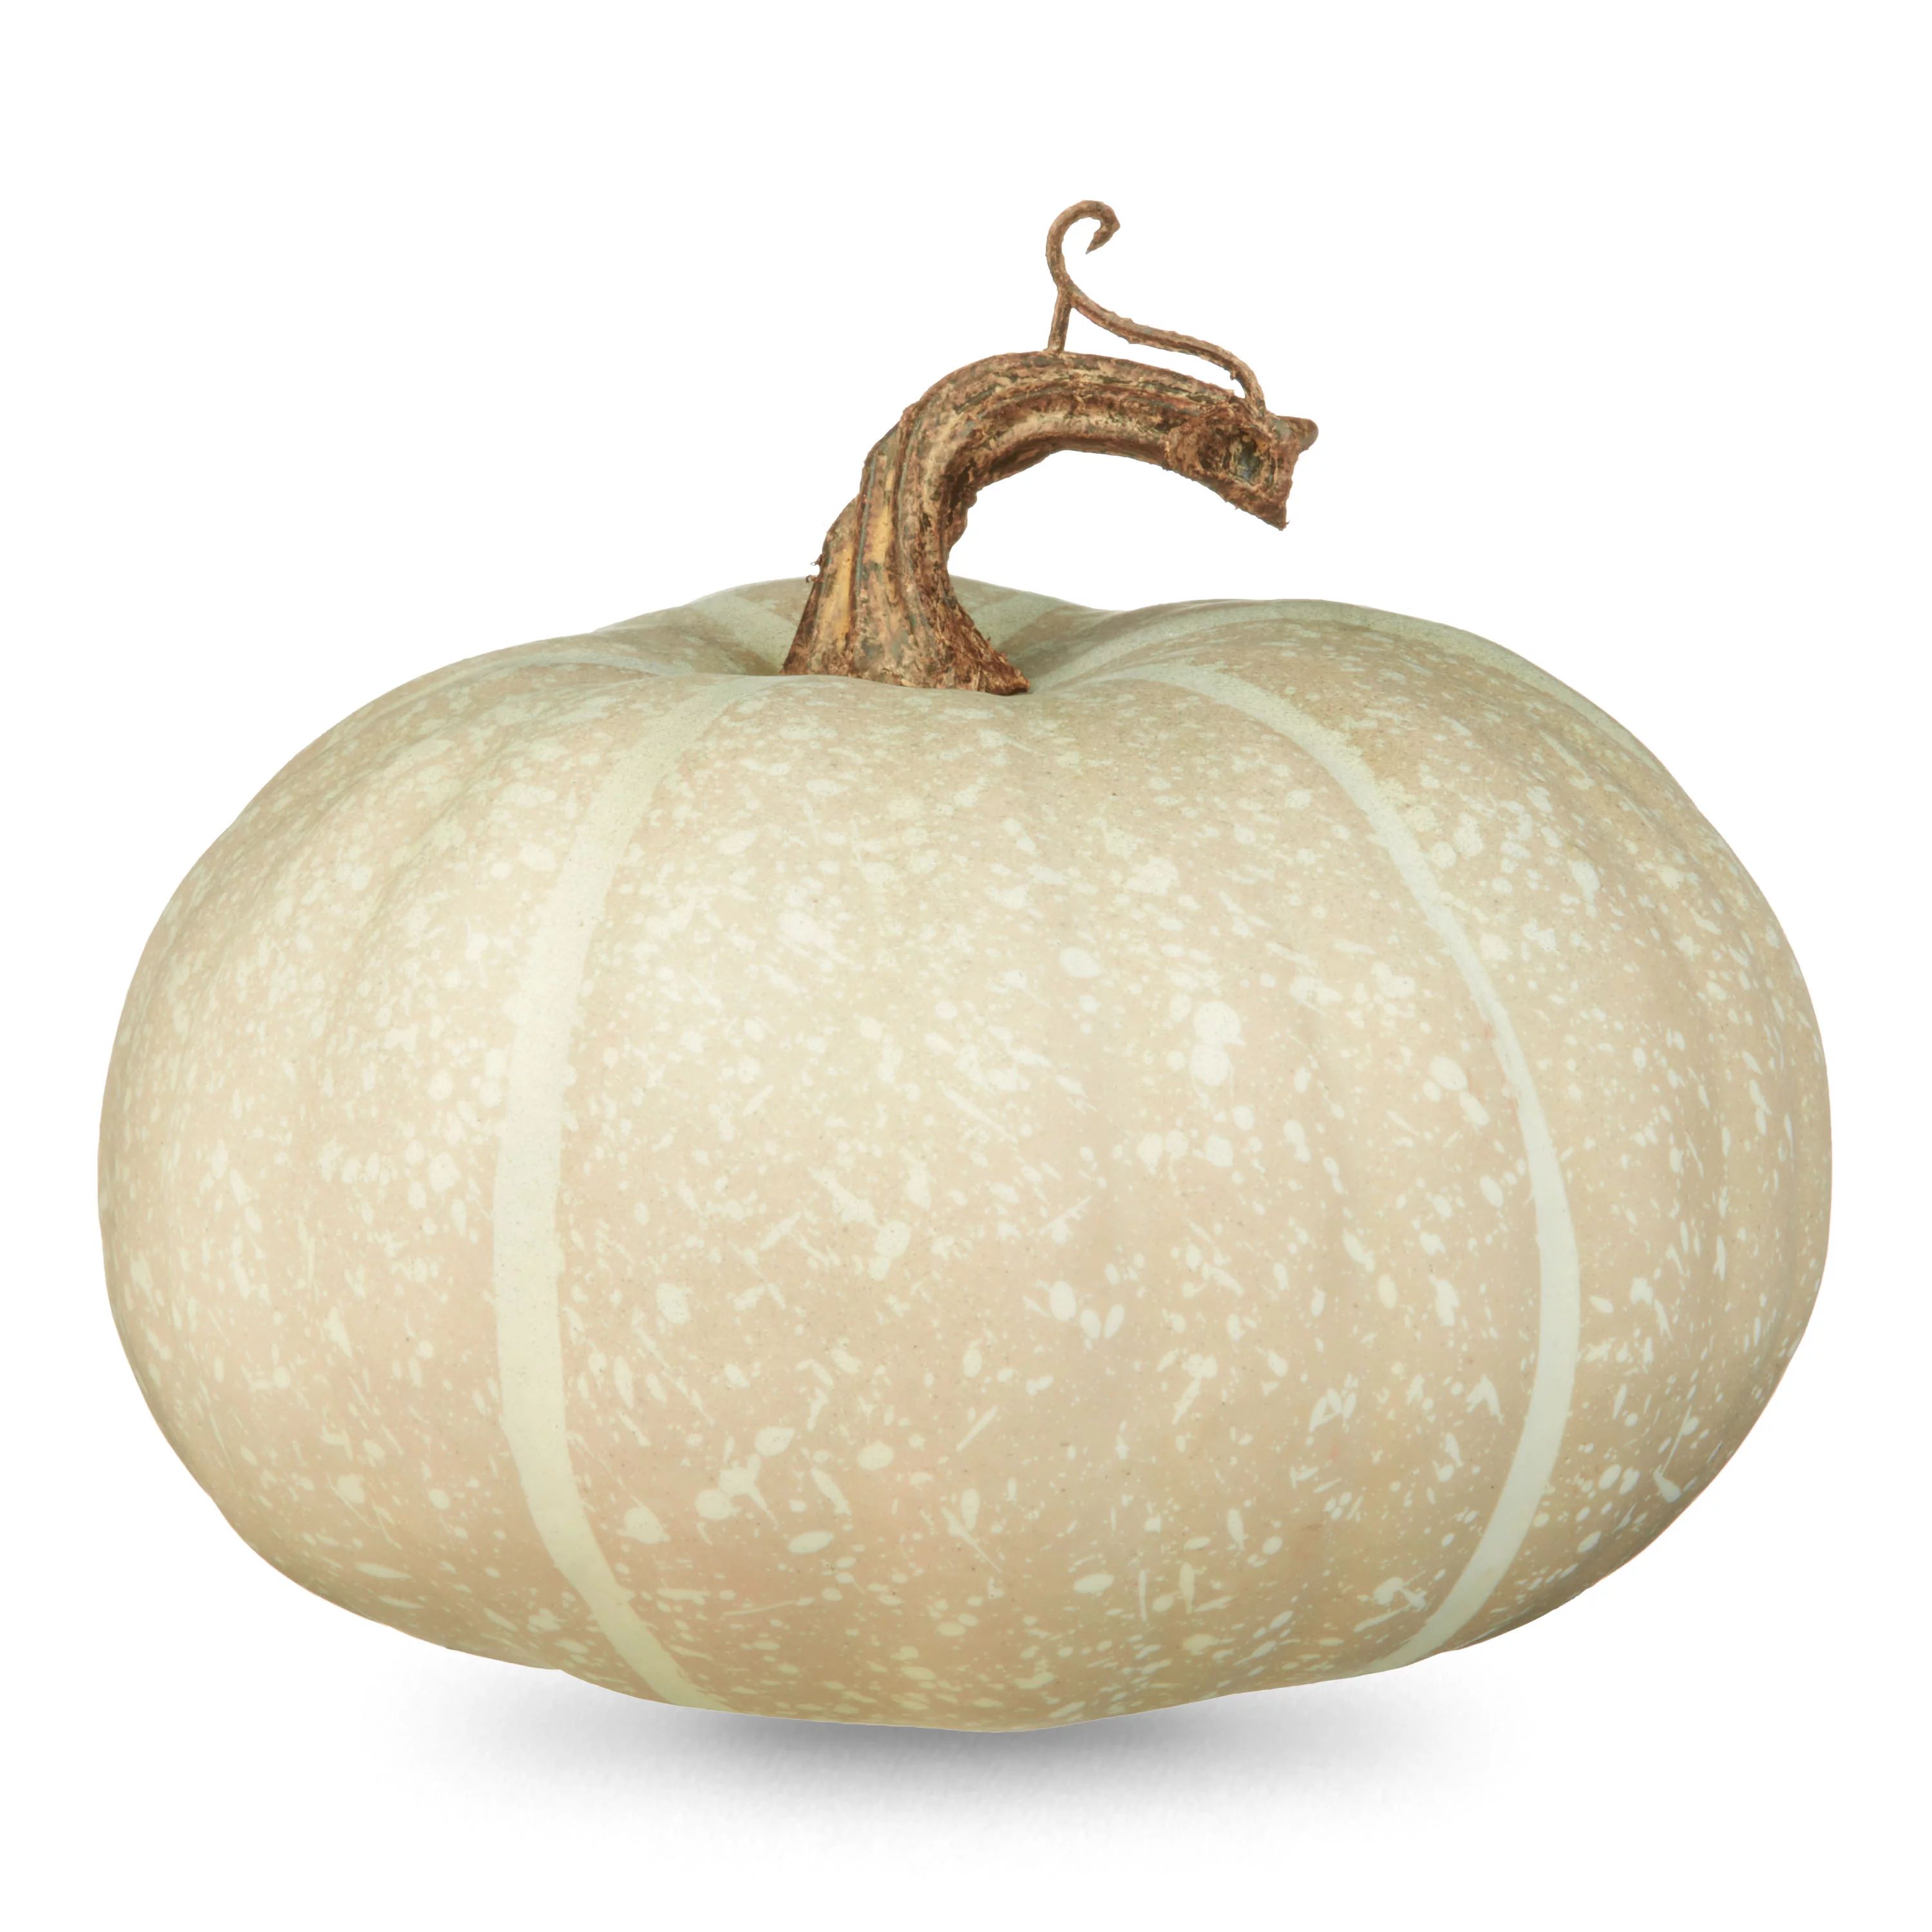 Way to Celebrate Harvest Short Natural Pumpkin Grey with Speckles 6” x 5” | Walmart (US)